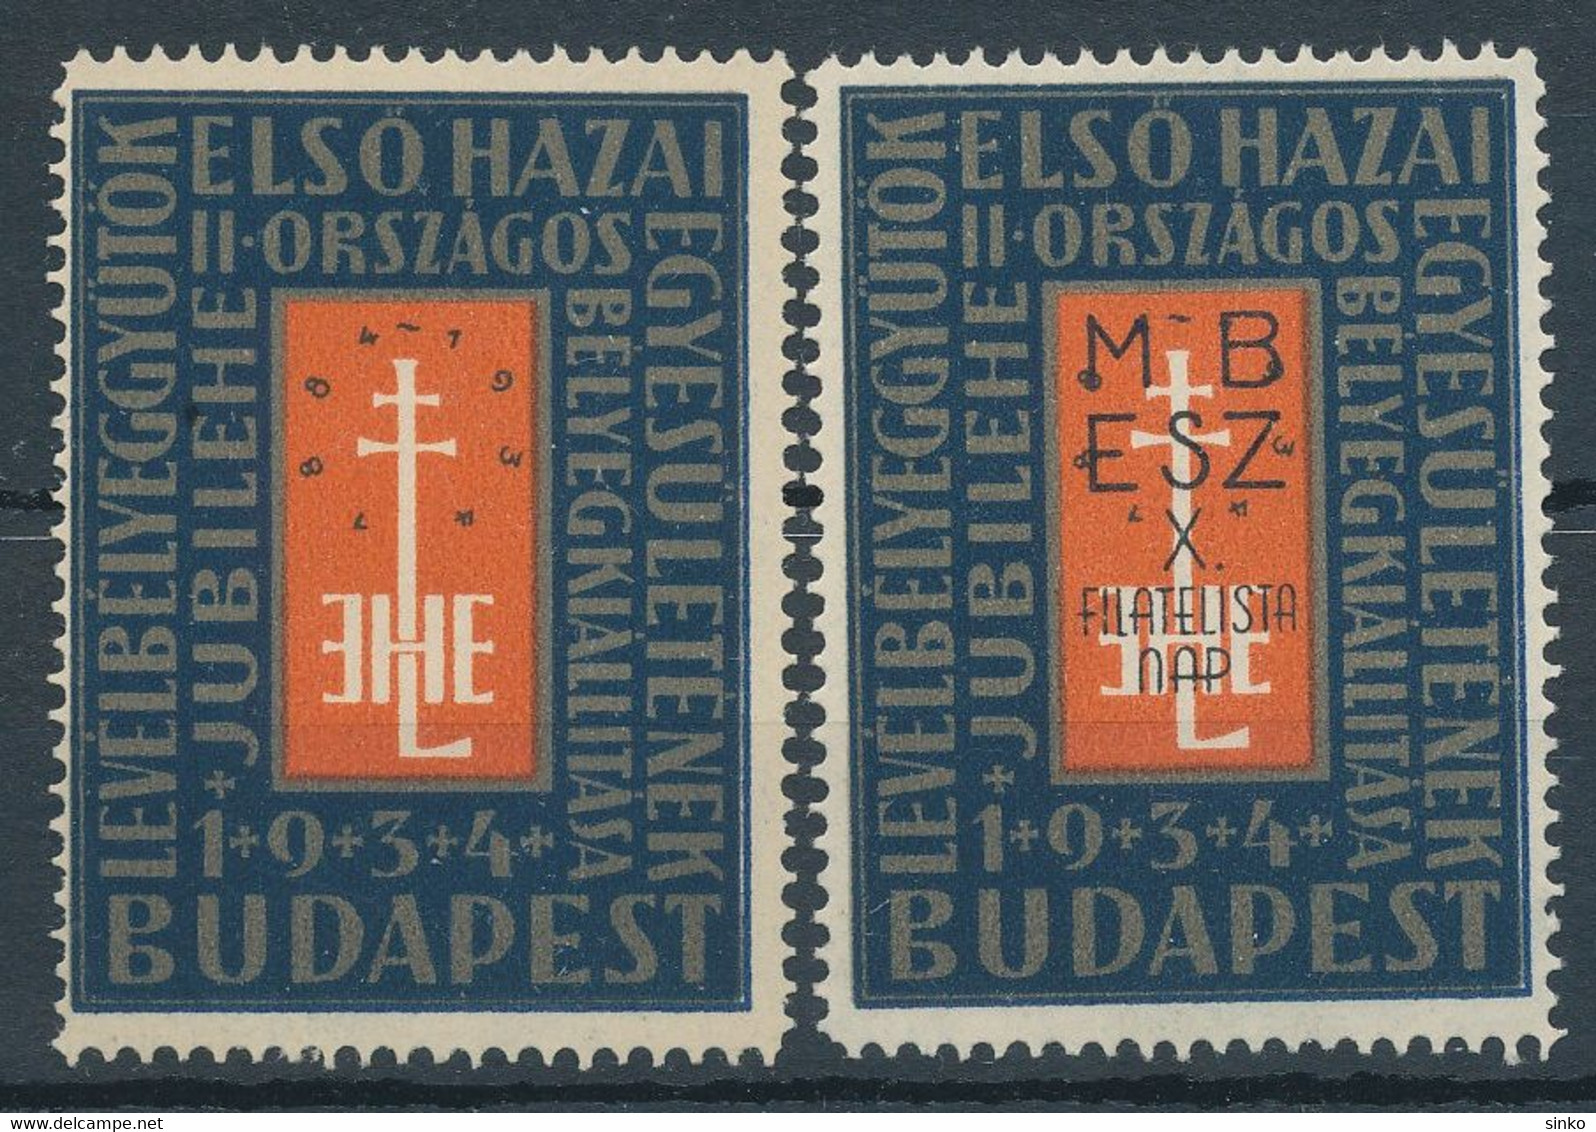 1934. Jubilehe Stamp Exhibition Budapest - Hojas Conmemorativas